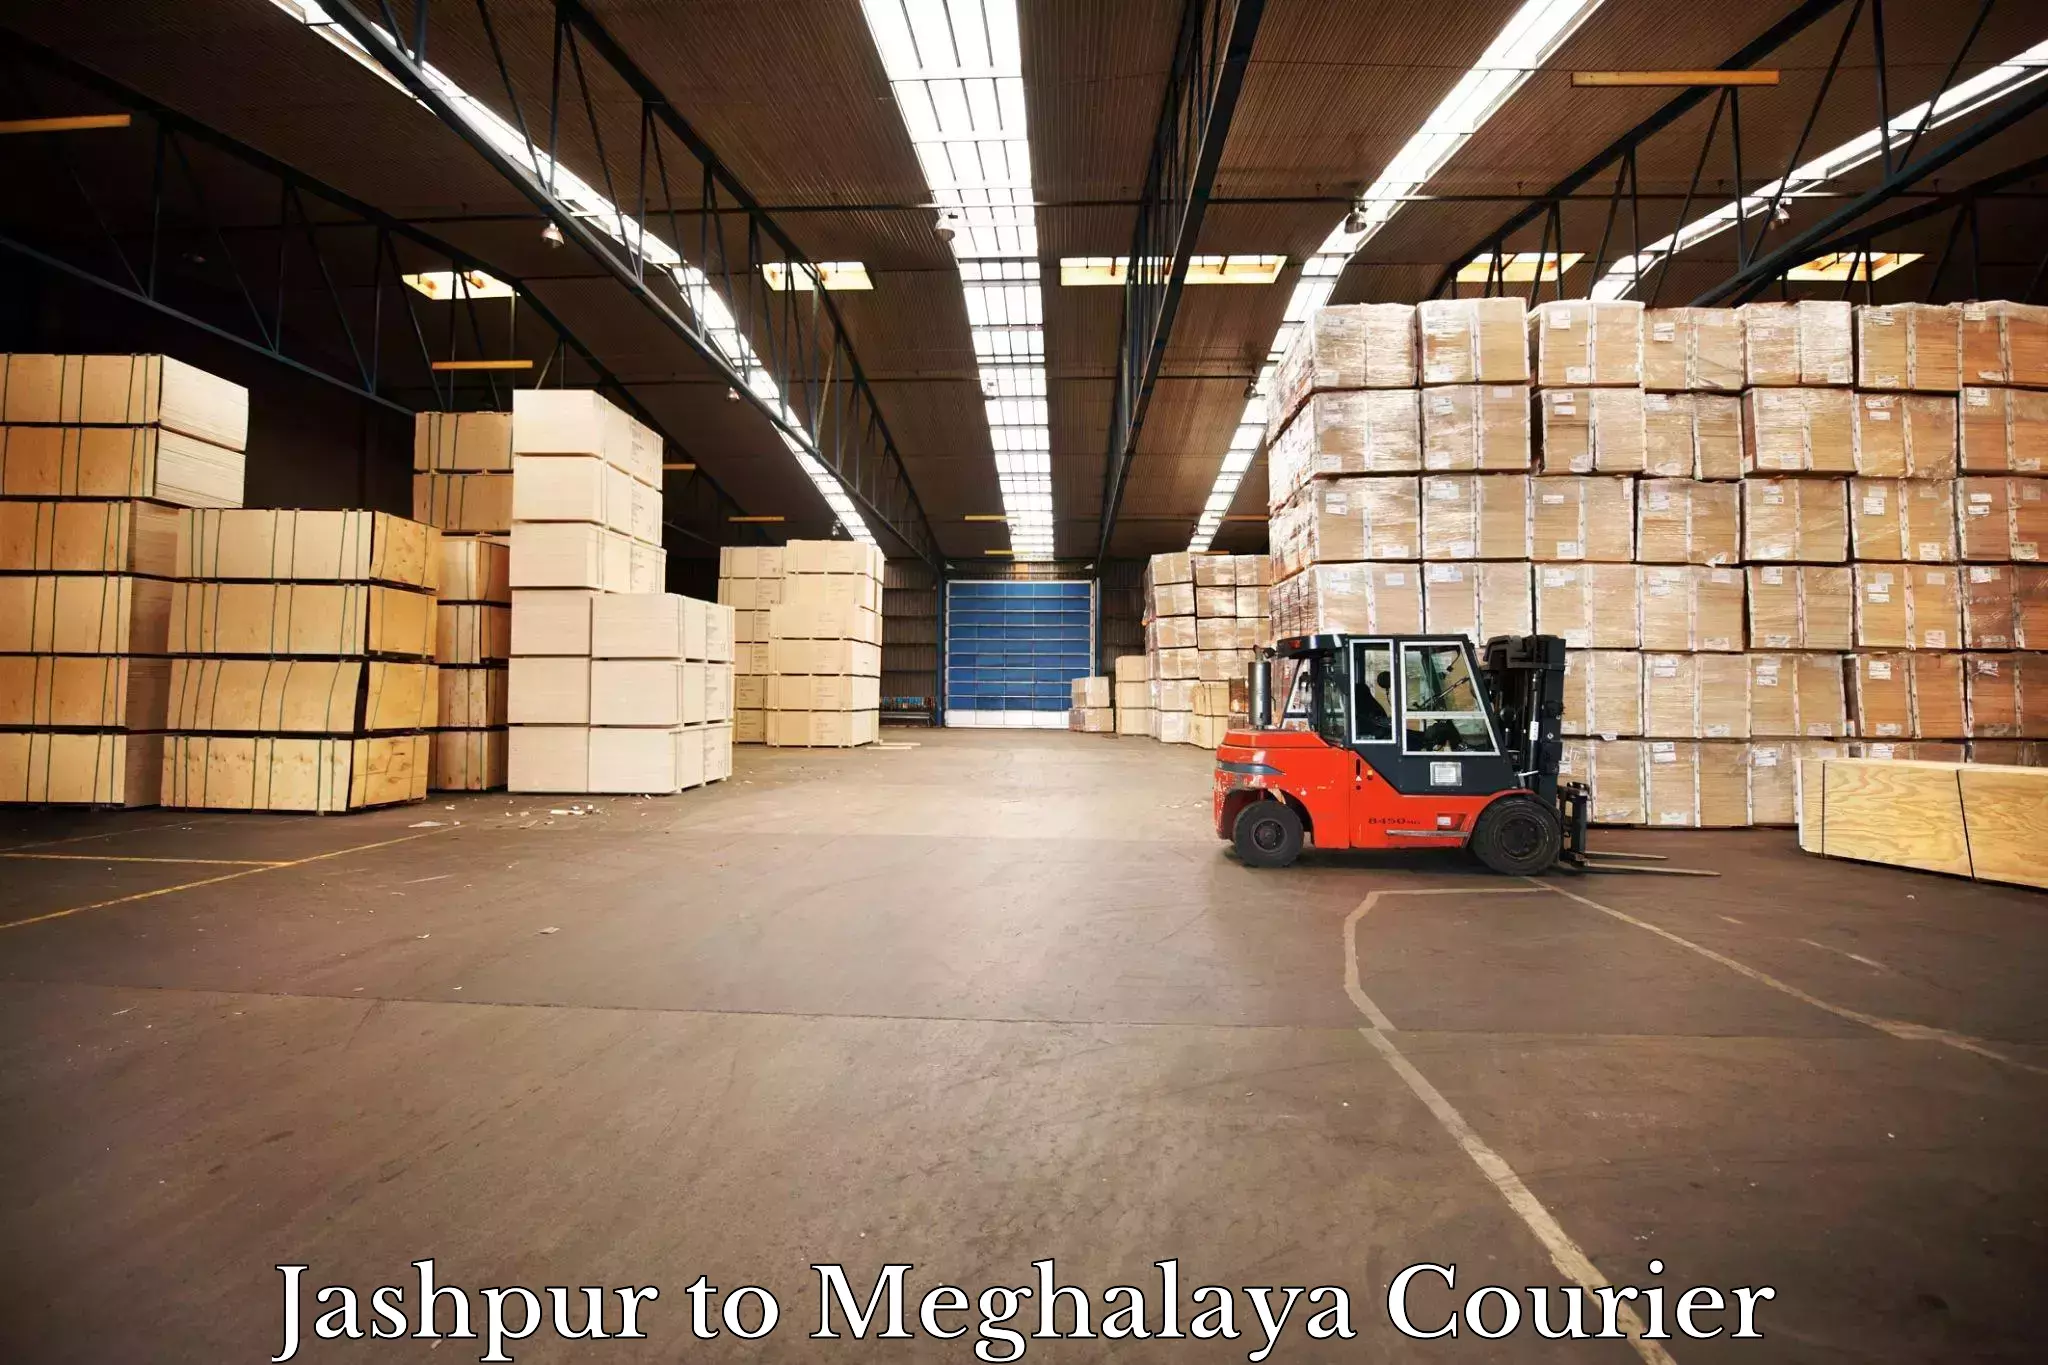 Subscription-based courier Jashpur to Meghalaya